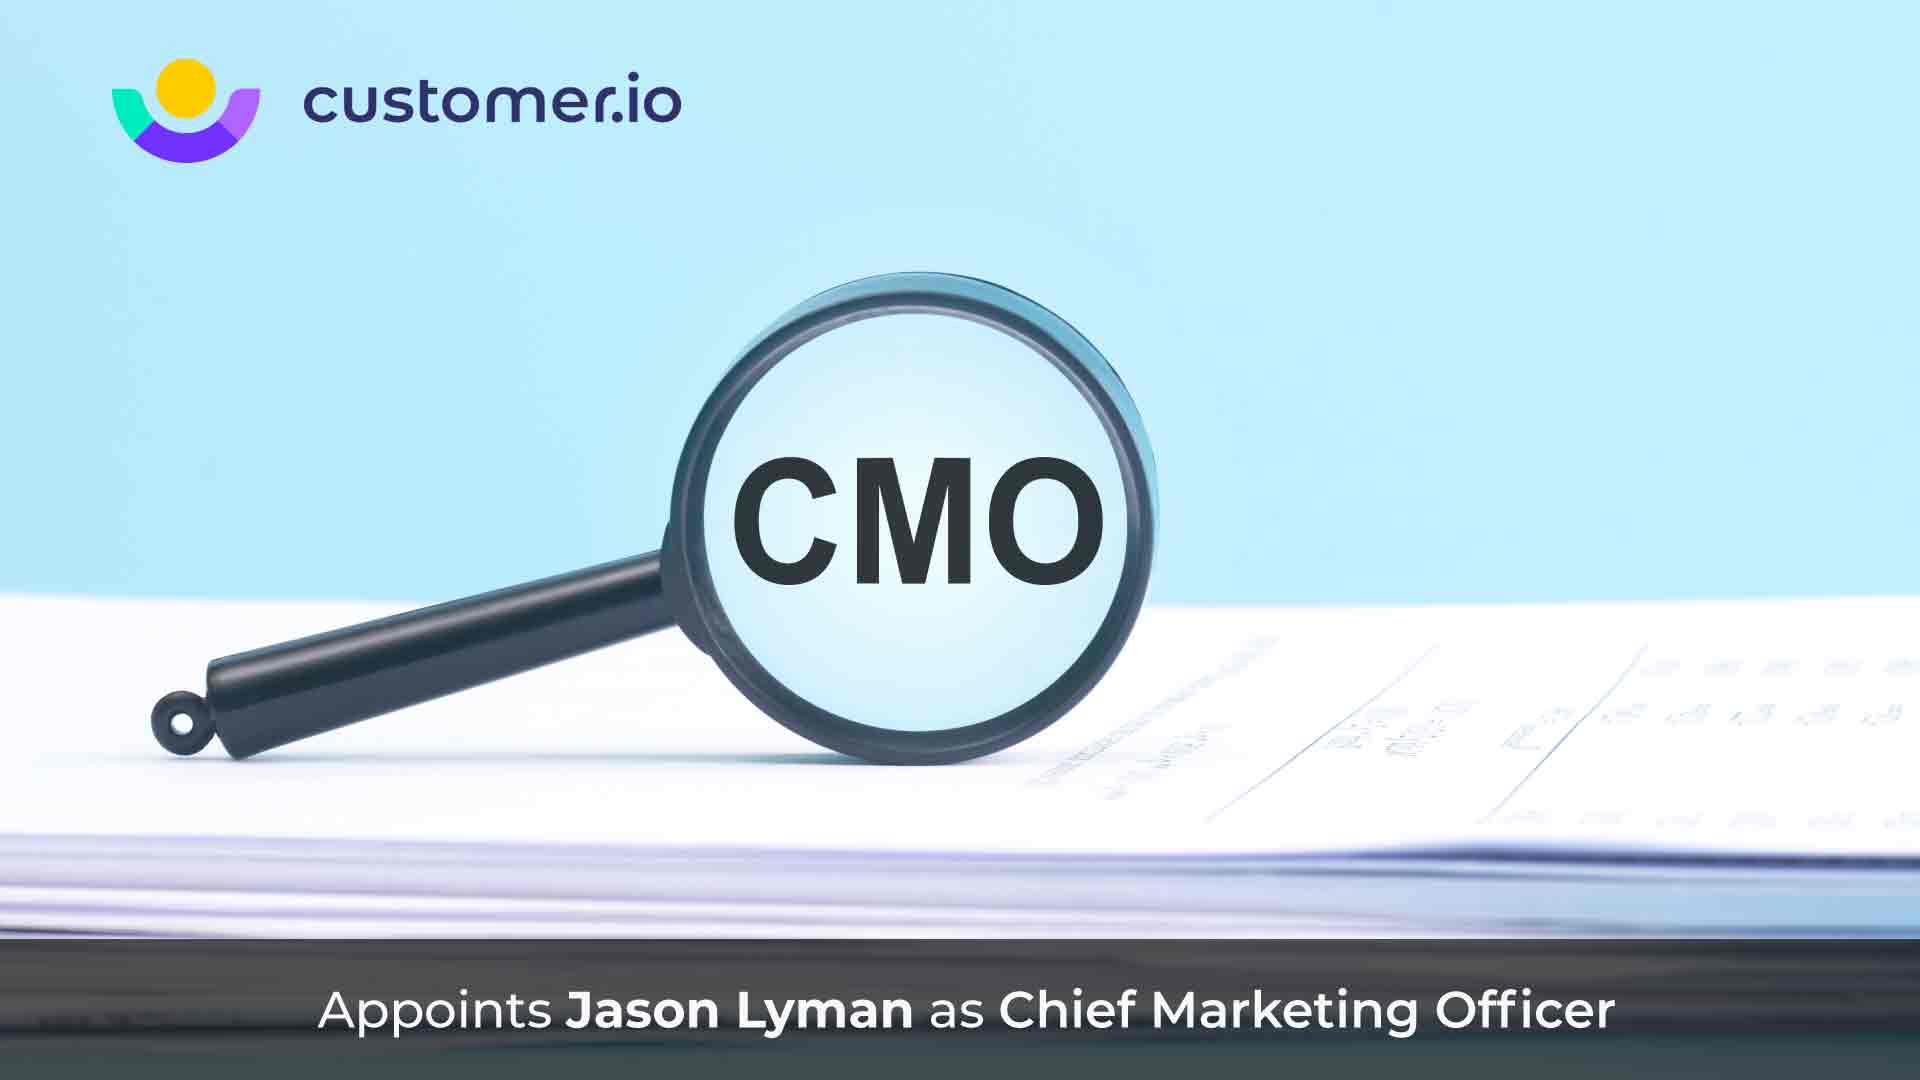 Customer.io Appoints Jason Lyman as Chief Marketing Officer